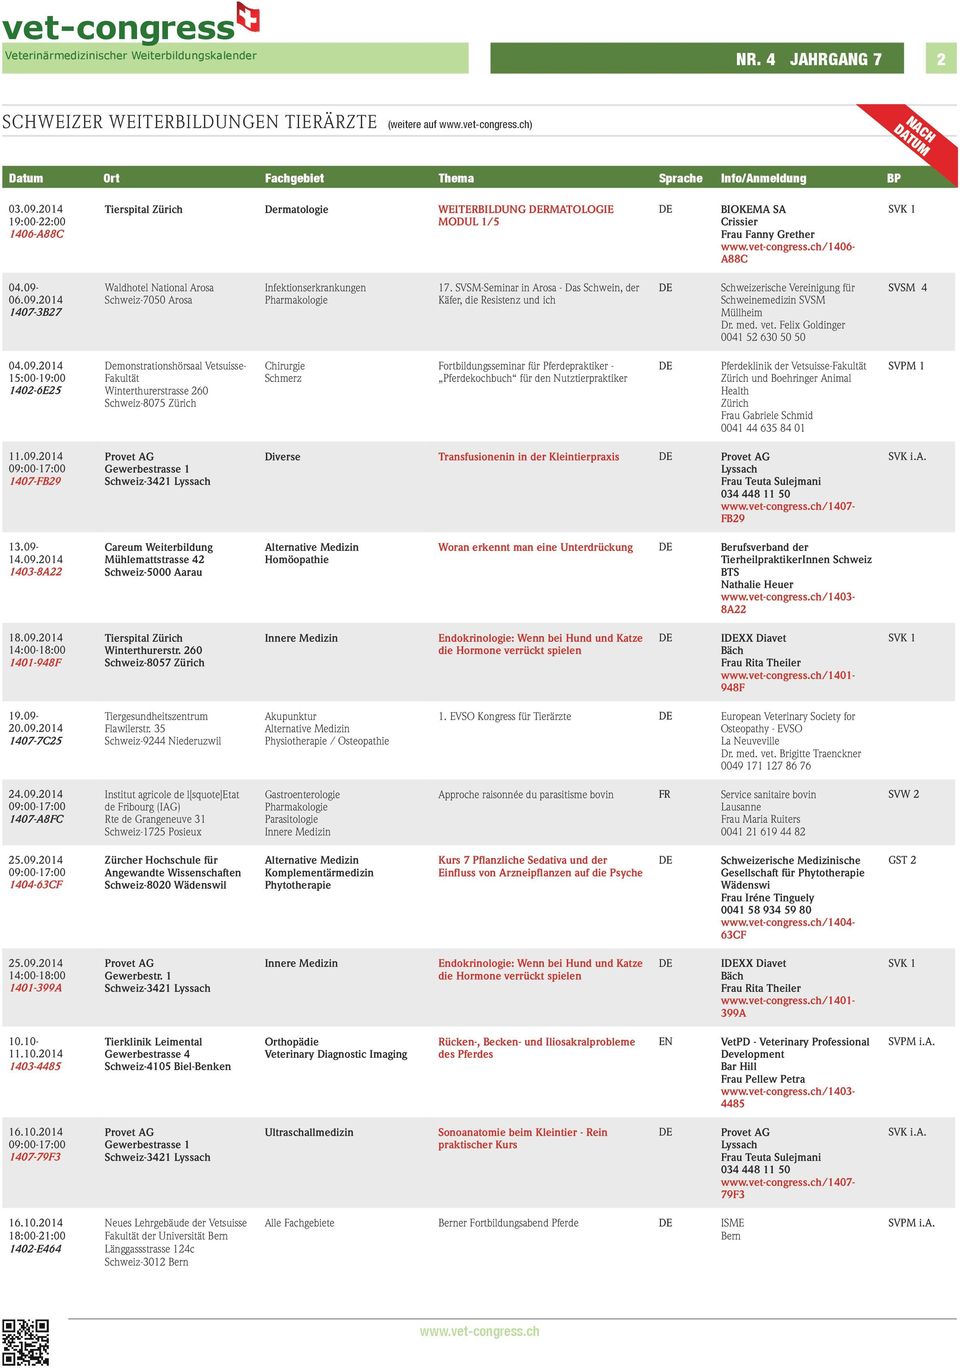 06.09.2014 1407-3B27 Waldhotel National Arosa Schweiz-7050 Arosa Infektionserkrankungen Pharmakologie 17.